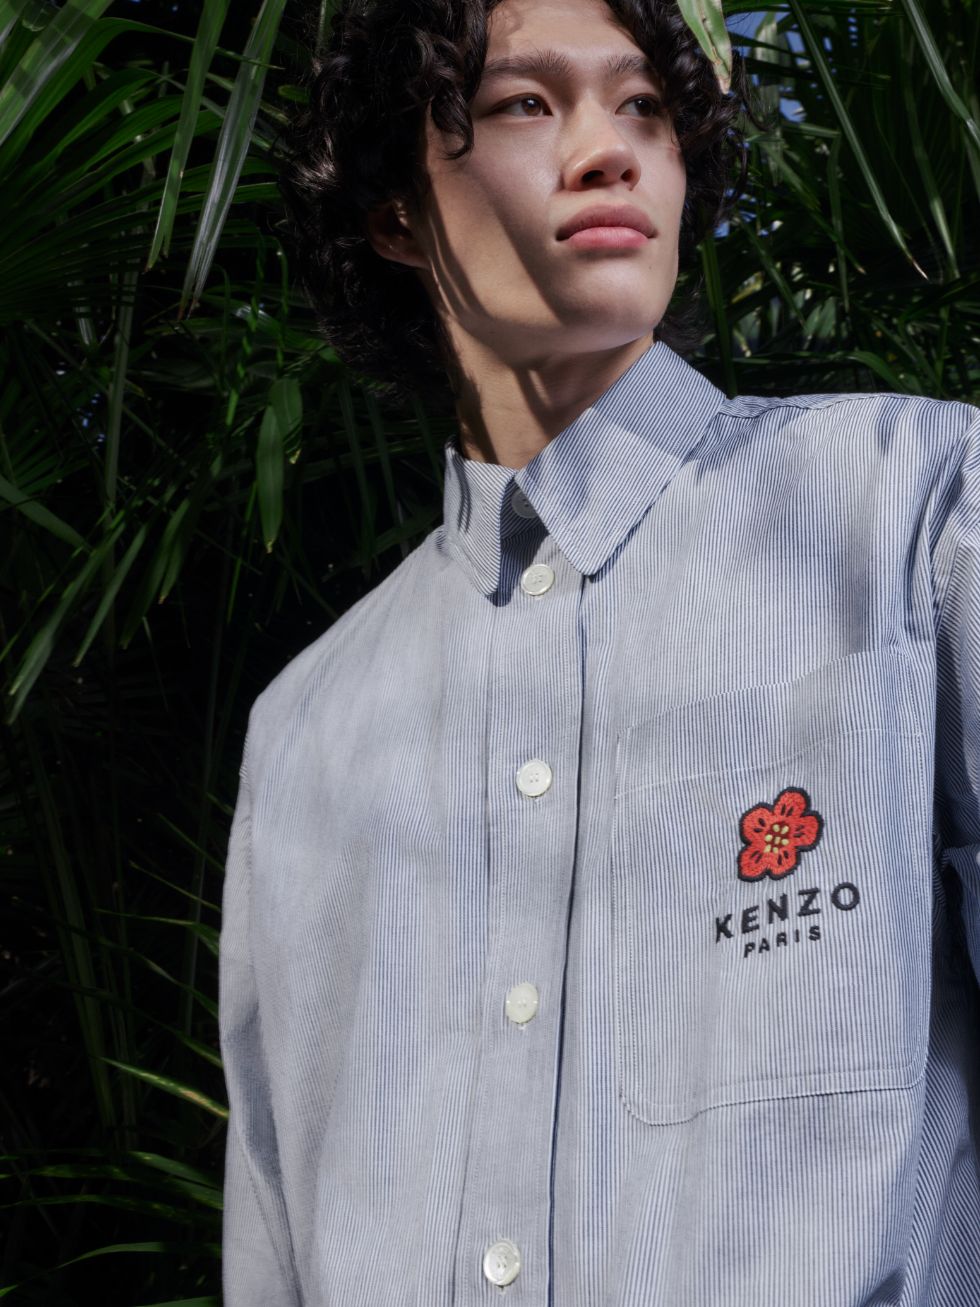 KENZO - Be ready 👀 KENZO Boke Flower Collection by @Nigo